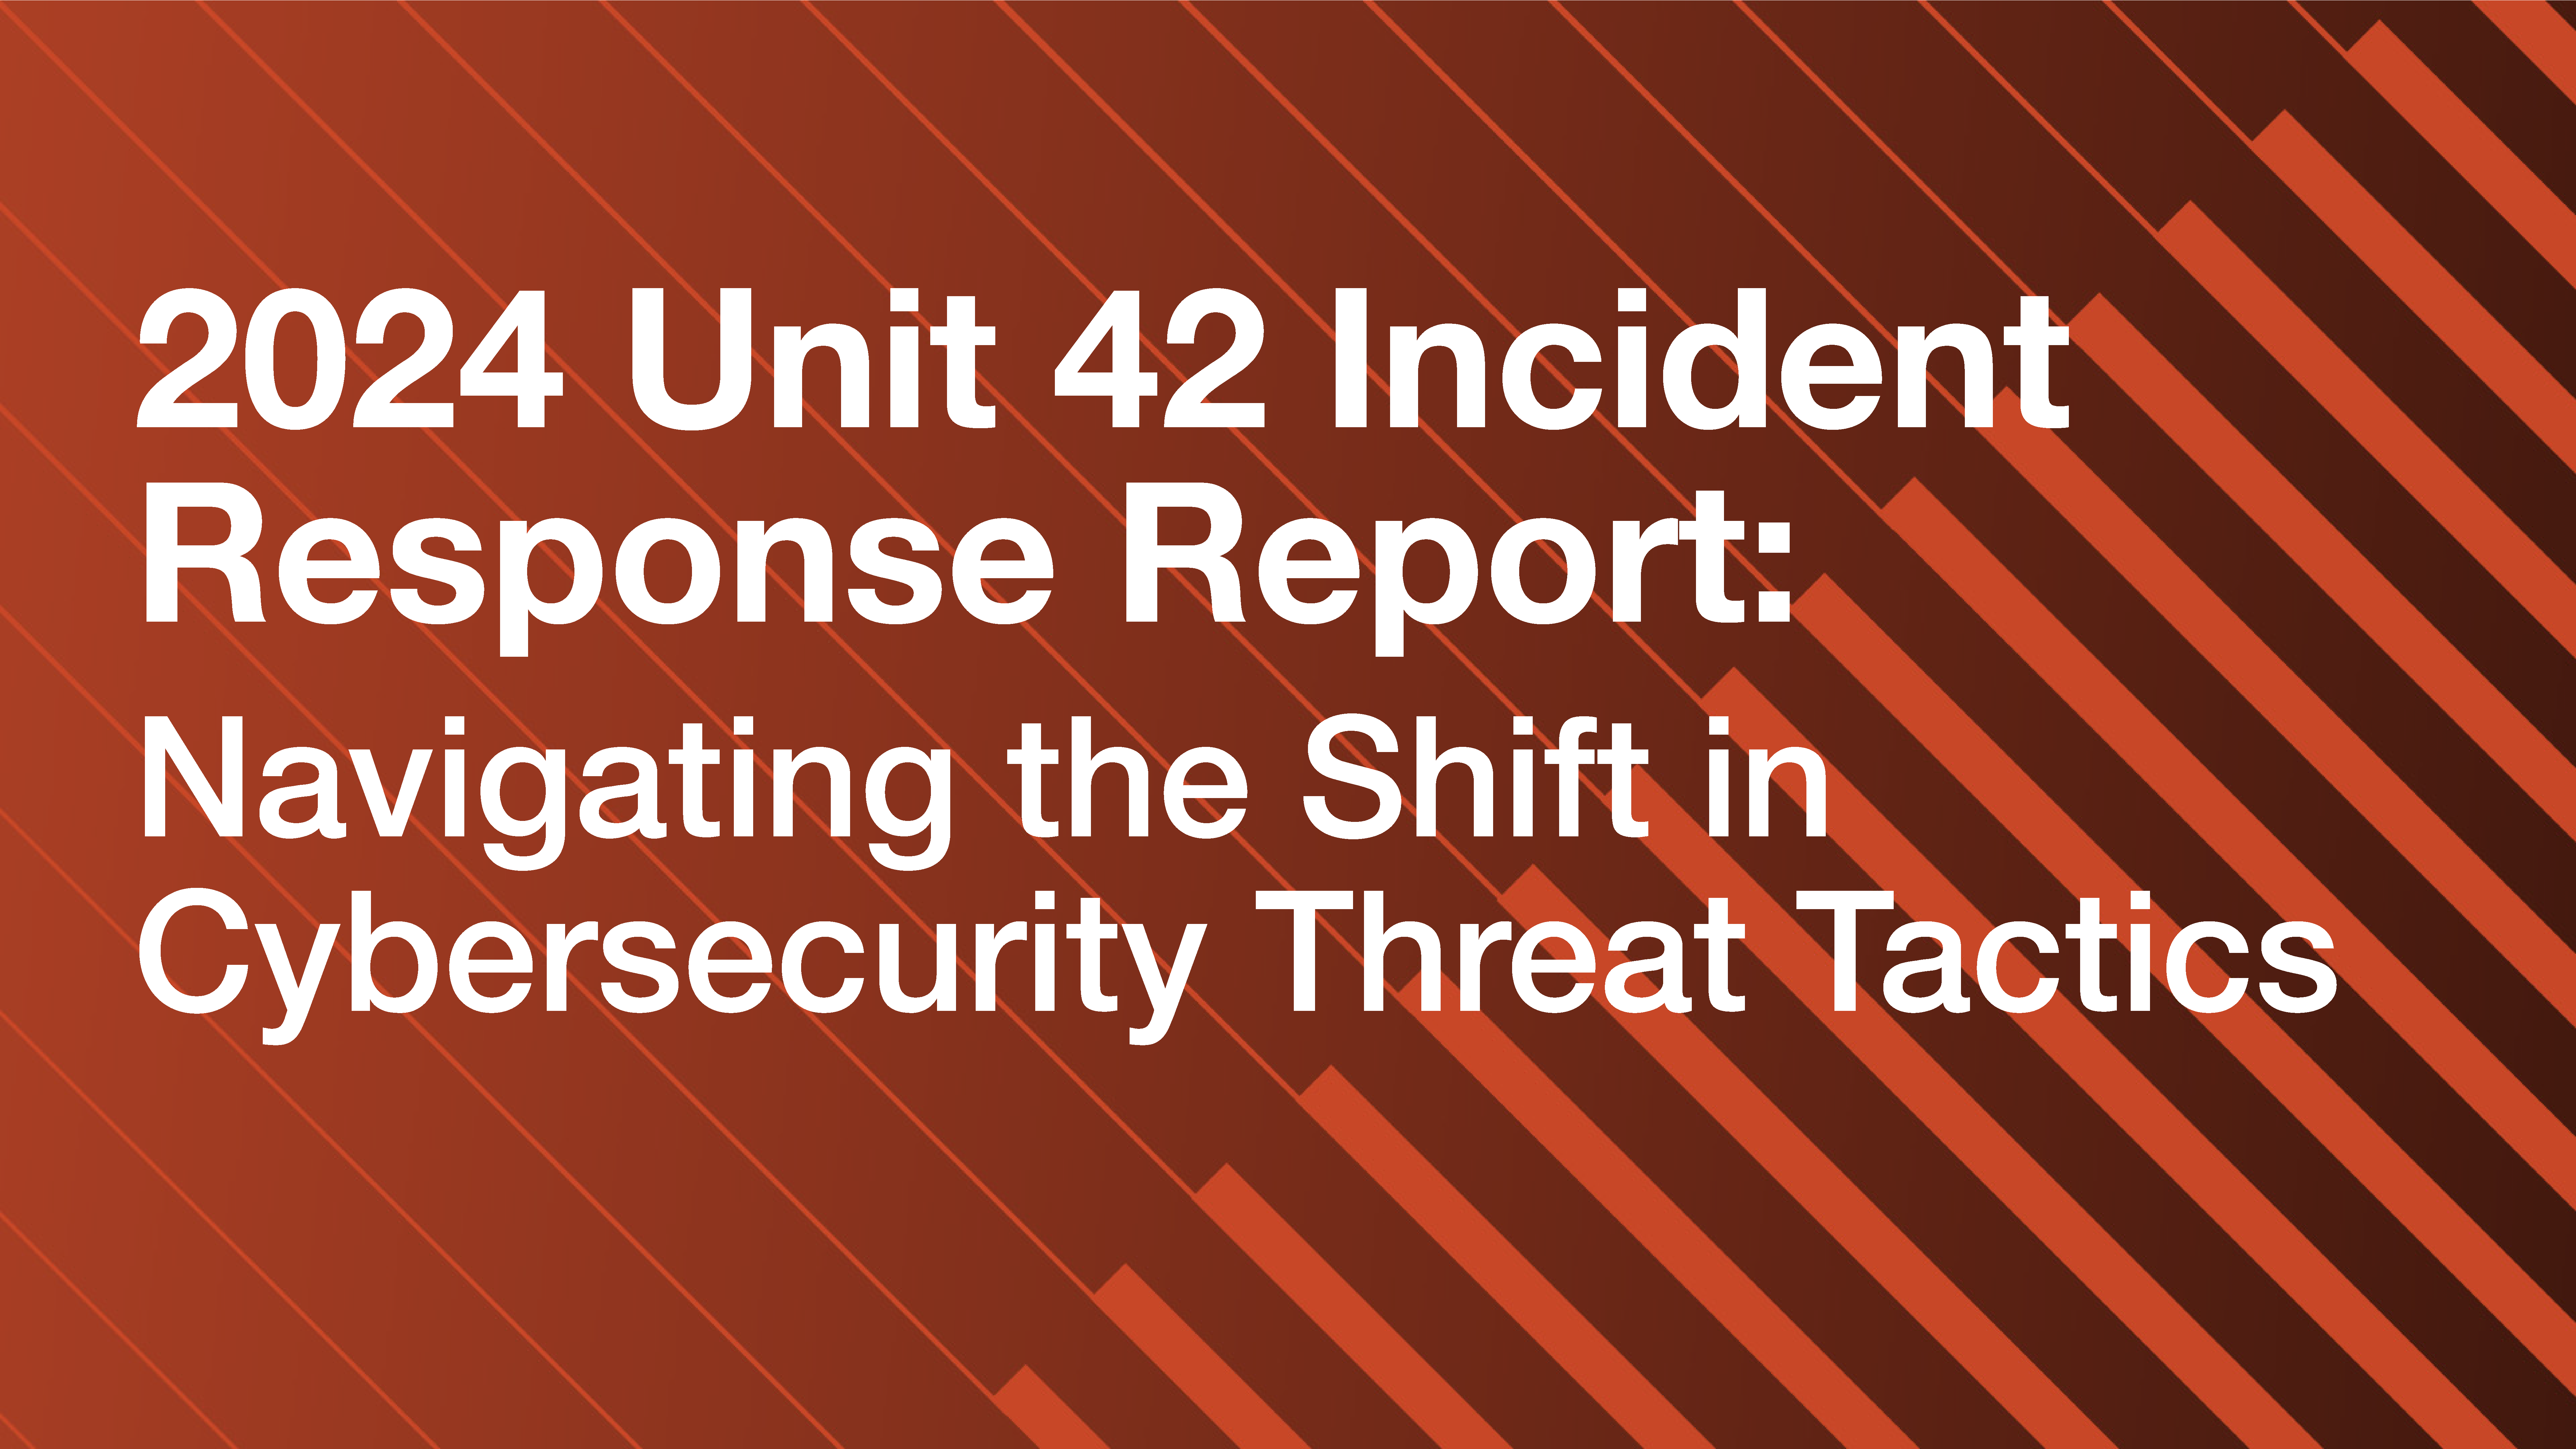 Closeup of Unit 42 logomark. 2024 Unit 42 Incident Response Report: Navigating the Shift in Cybersecurity Threat Tactics.